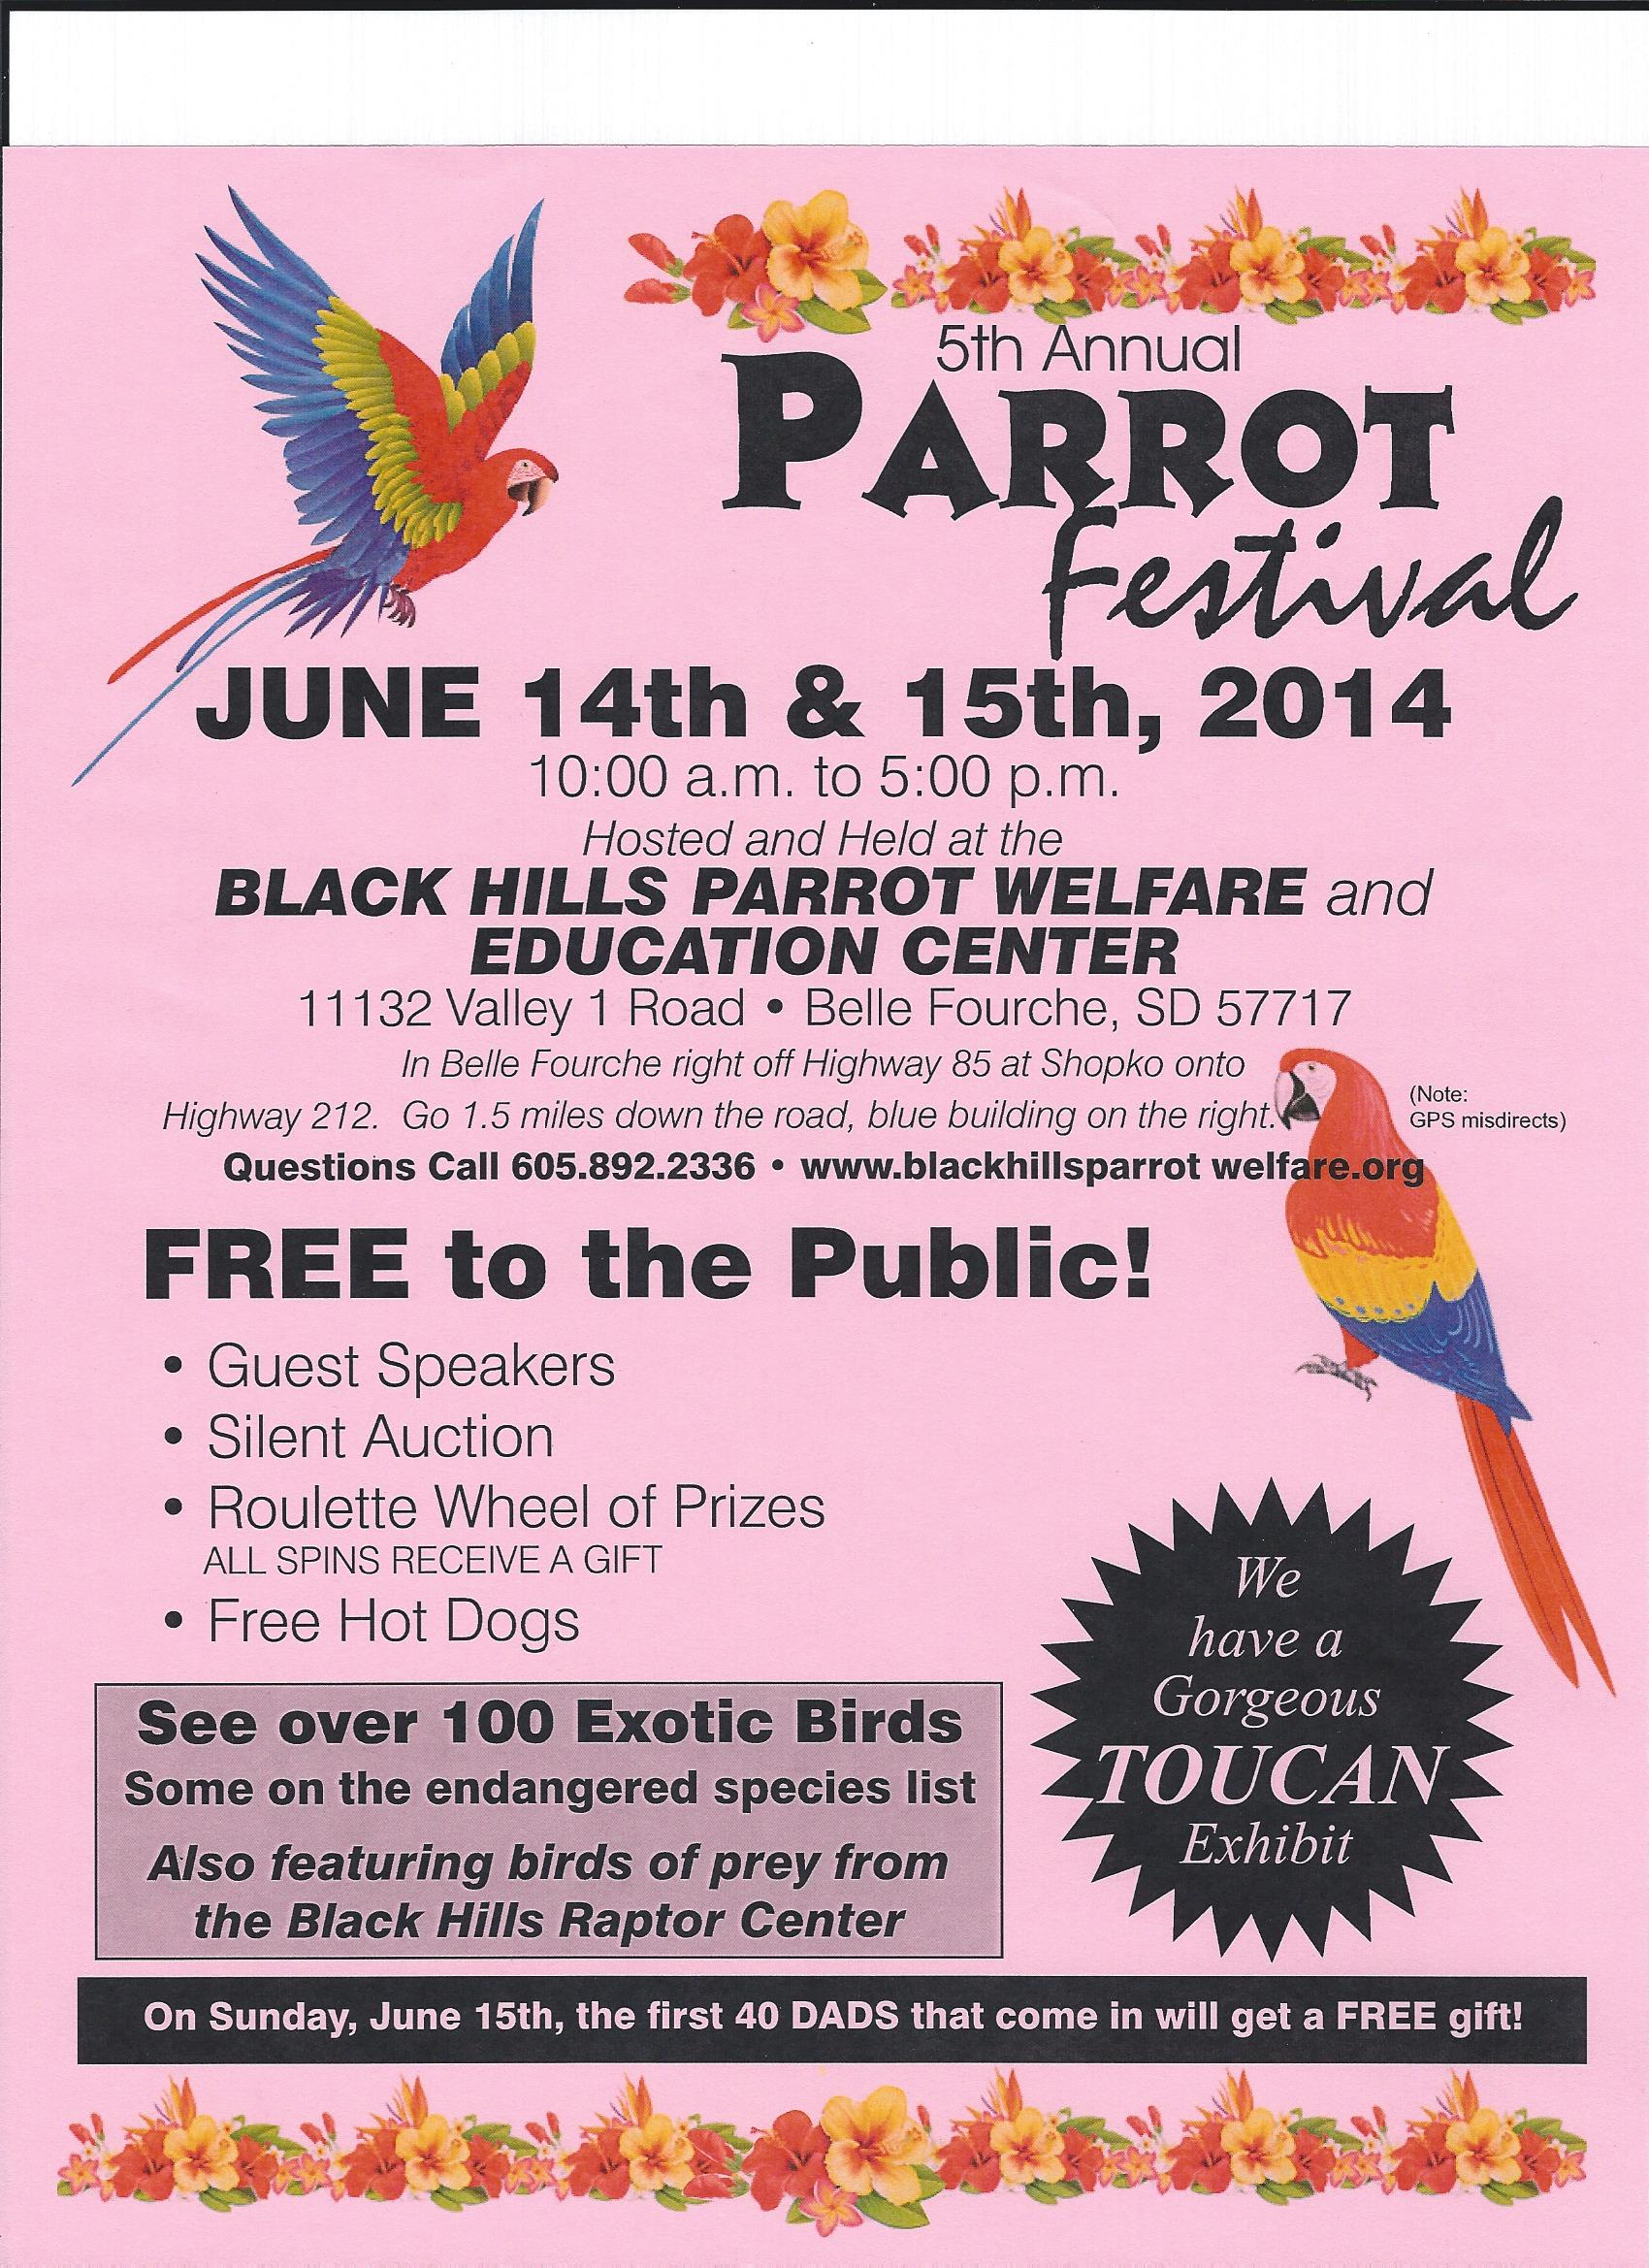 Public Invited To Flock To Parrot Festival Fundraiser SDPB Radio